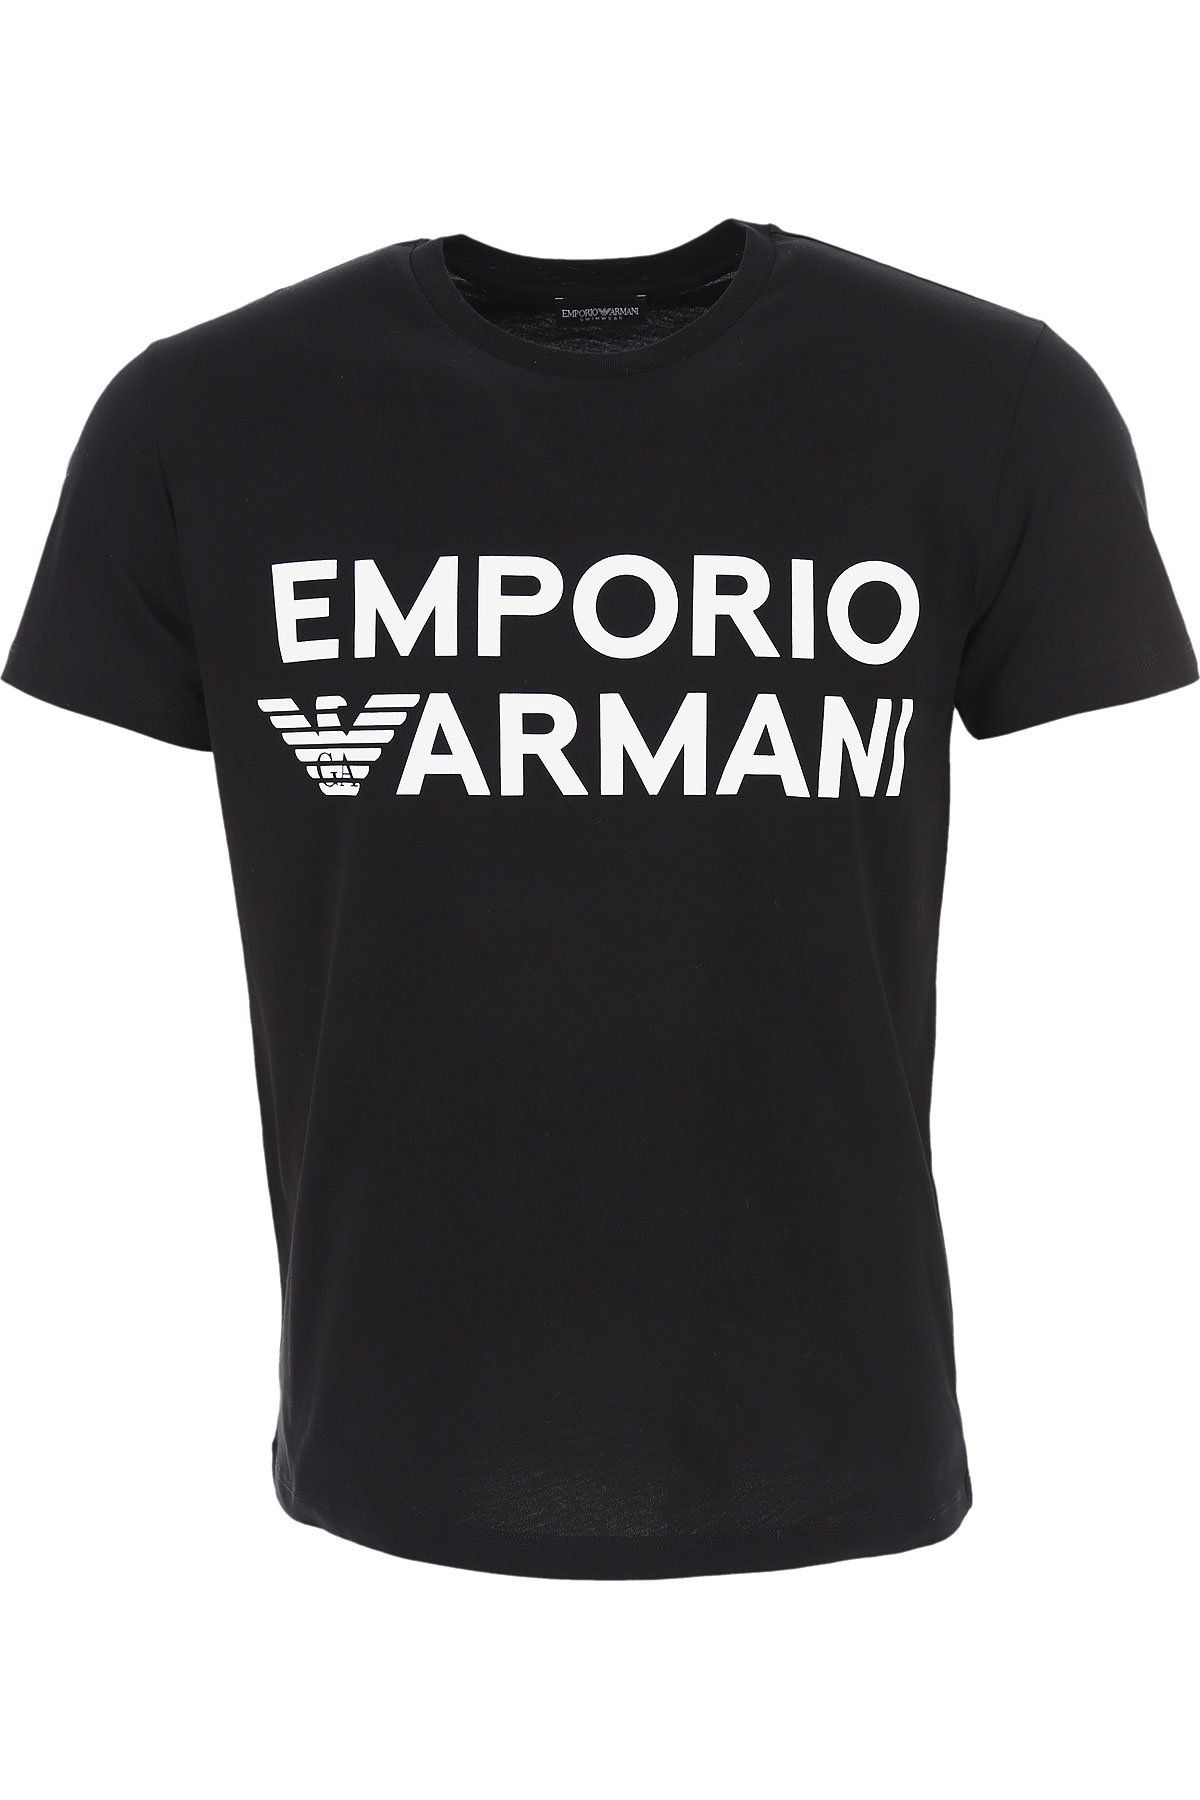 Mens Clothing Emporio Armani, Style code: 211831-3r479-00020